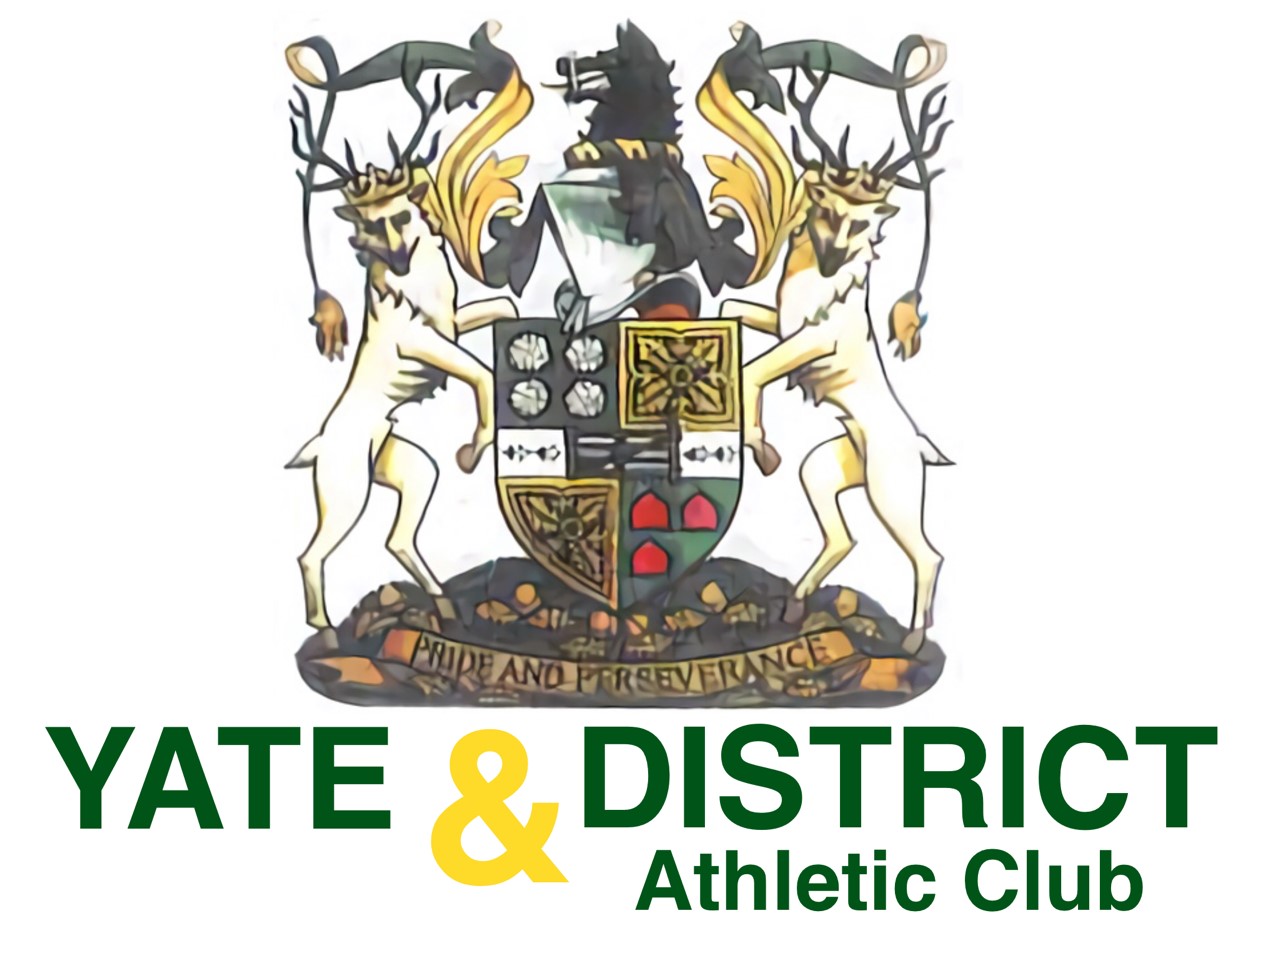 Yate & District Athletic Club